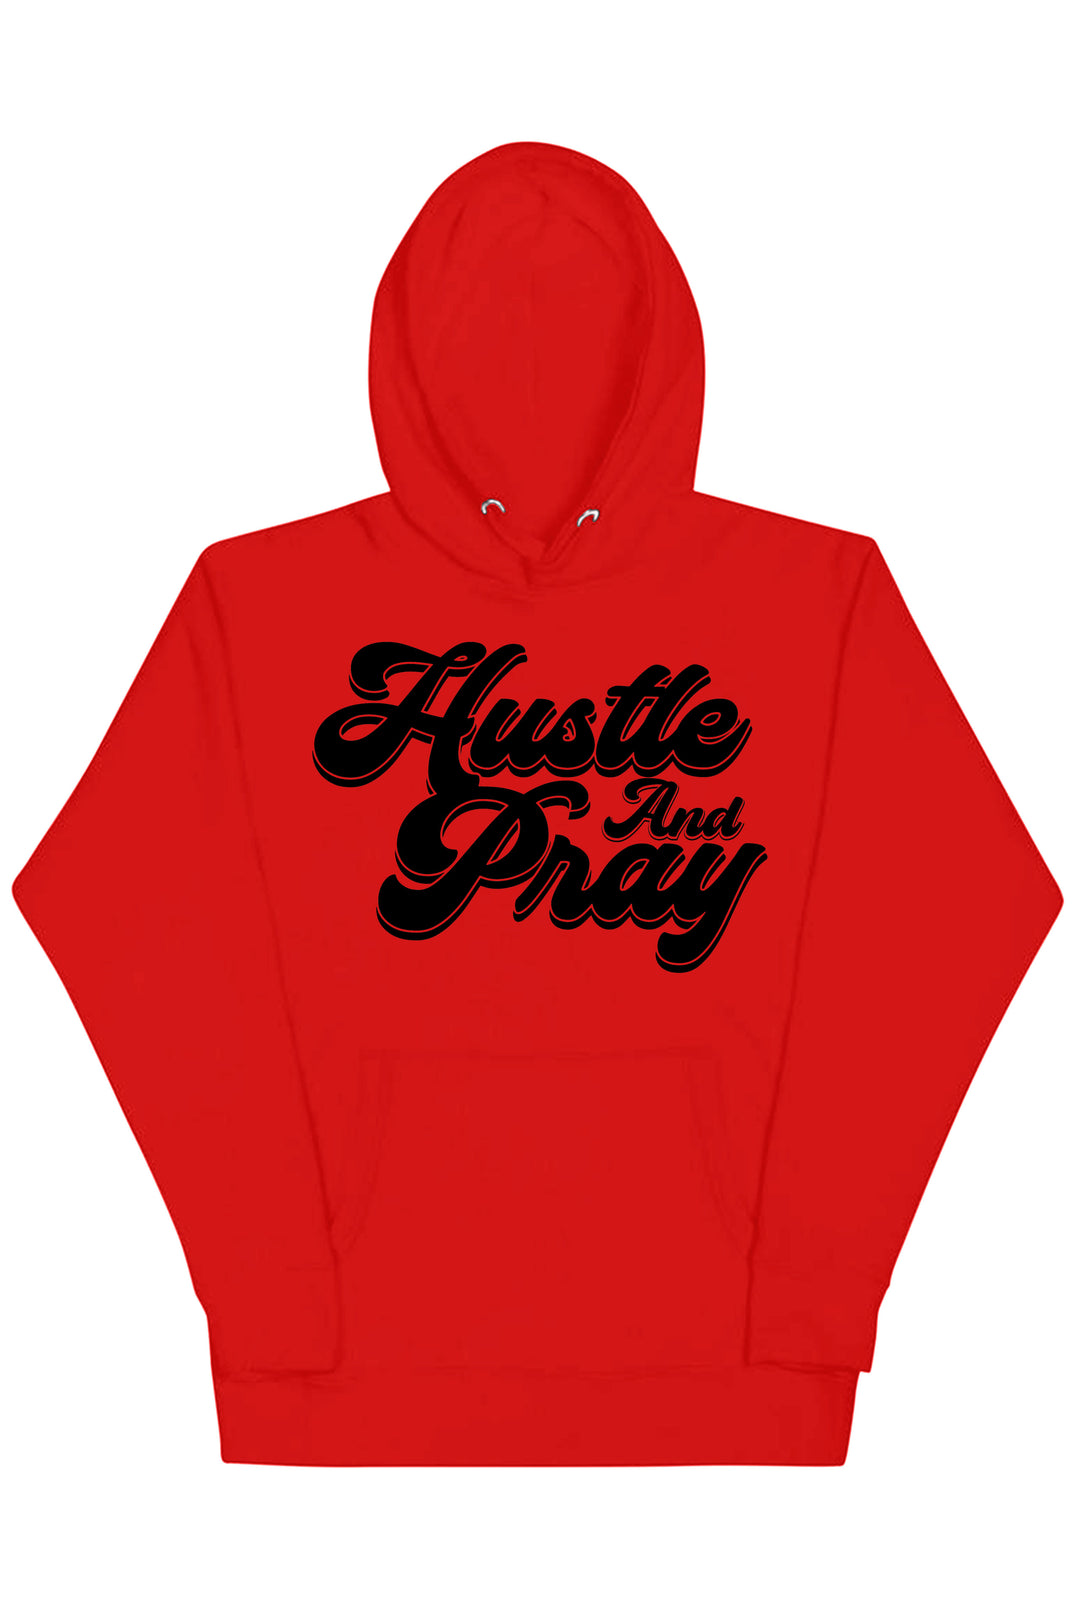 Hustle And Pray Hoodie (Black Logo) - Zamage